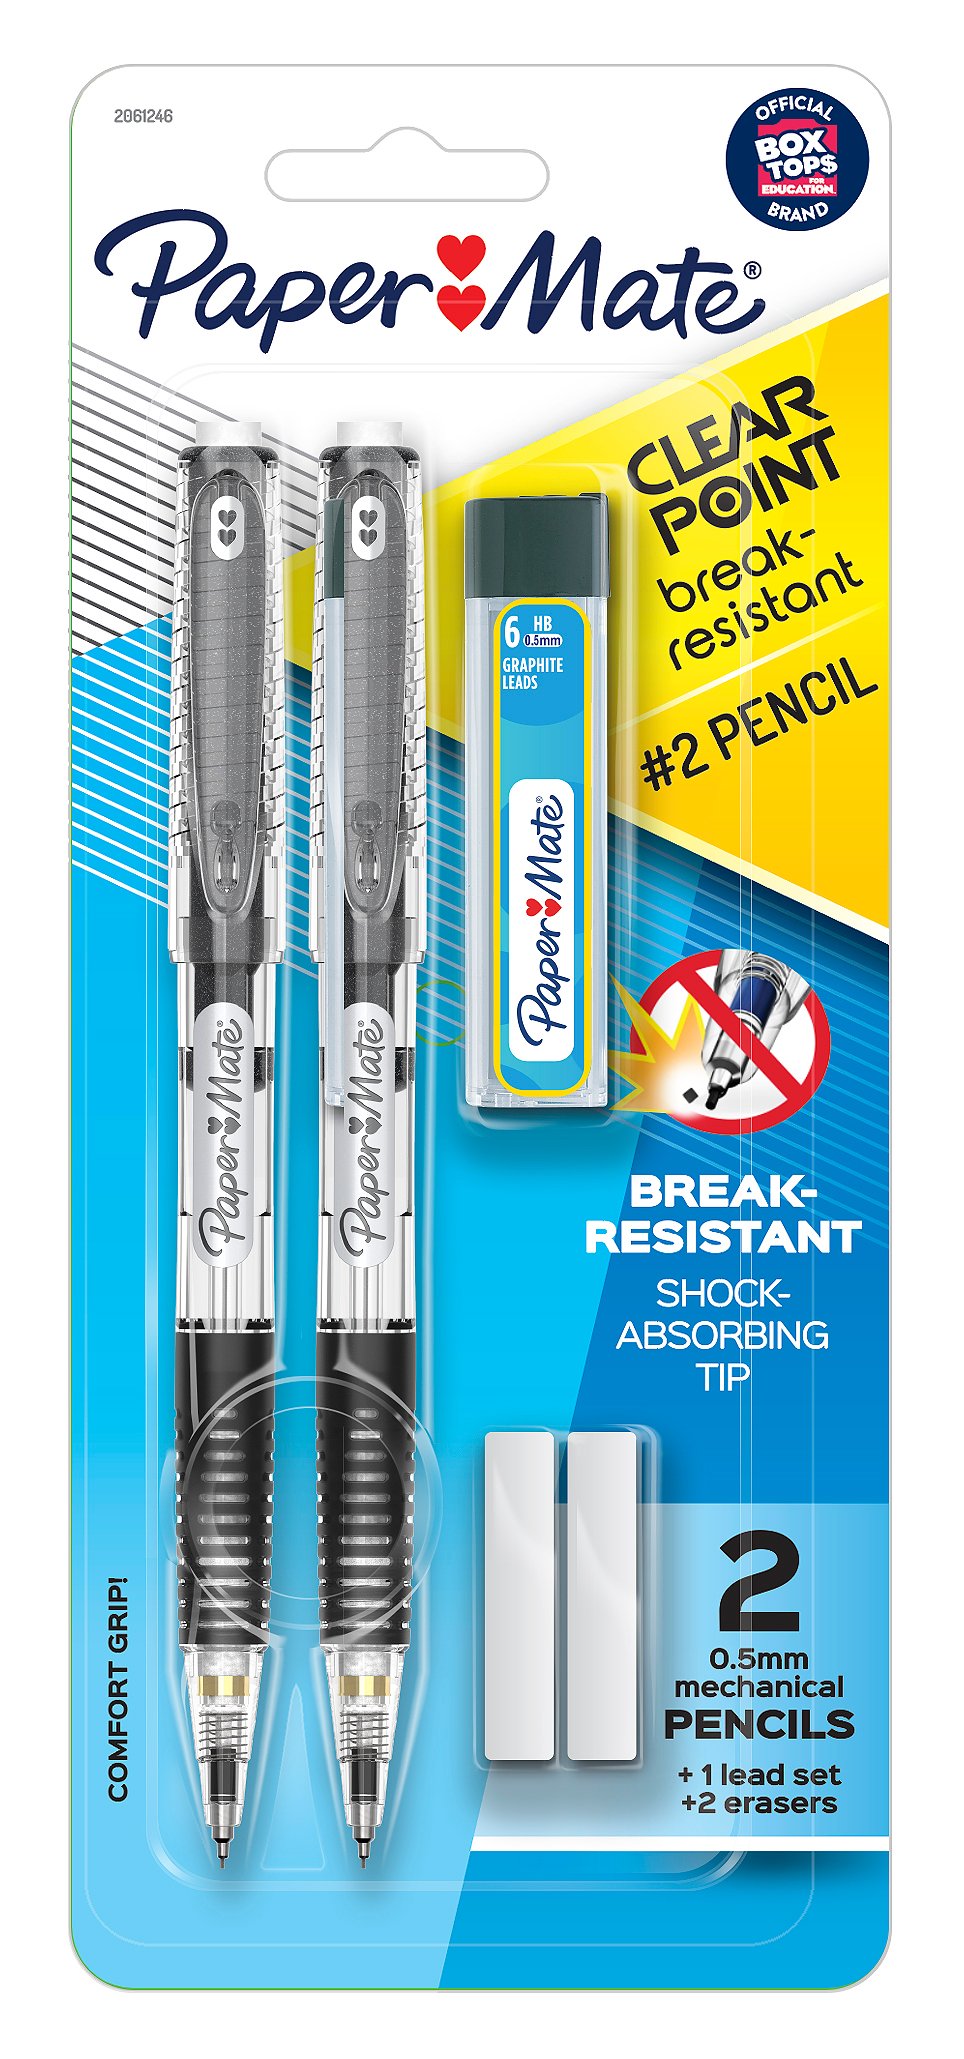 Paper Mate Clearpoint Break-Resistant Mechanical Pencil Sets, 0.5mm, HB #2  Lead, mechanical pencil